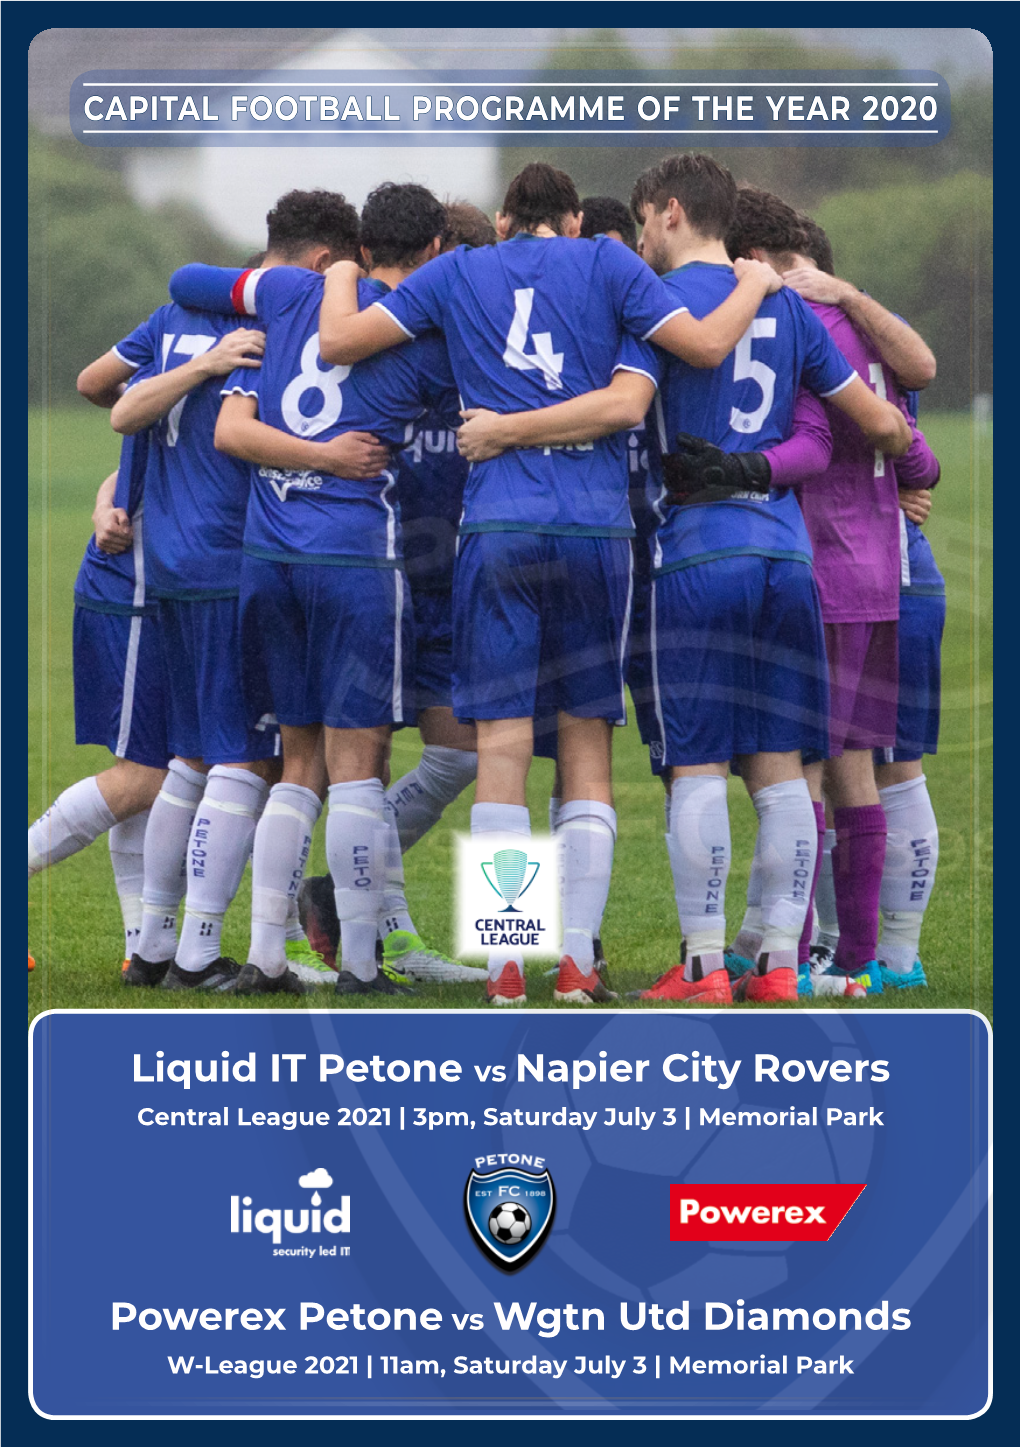 Petone Vs Napier City Rovers (July3,2021)